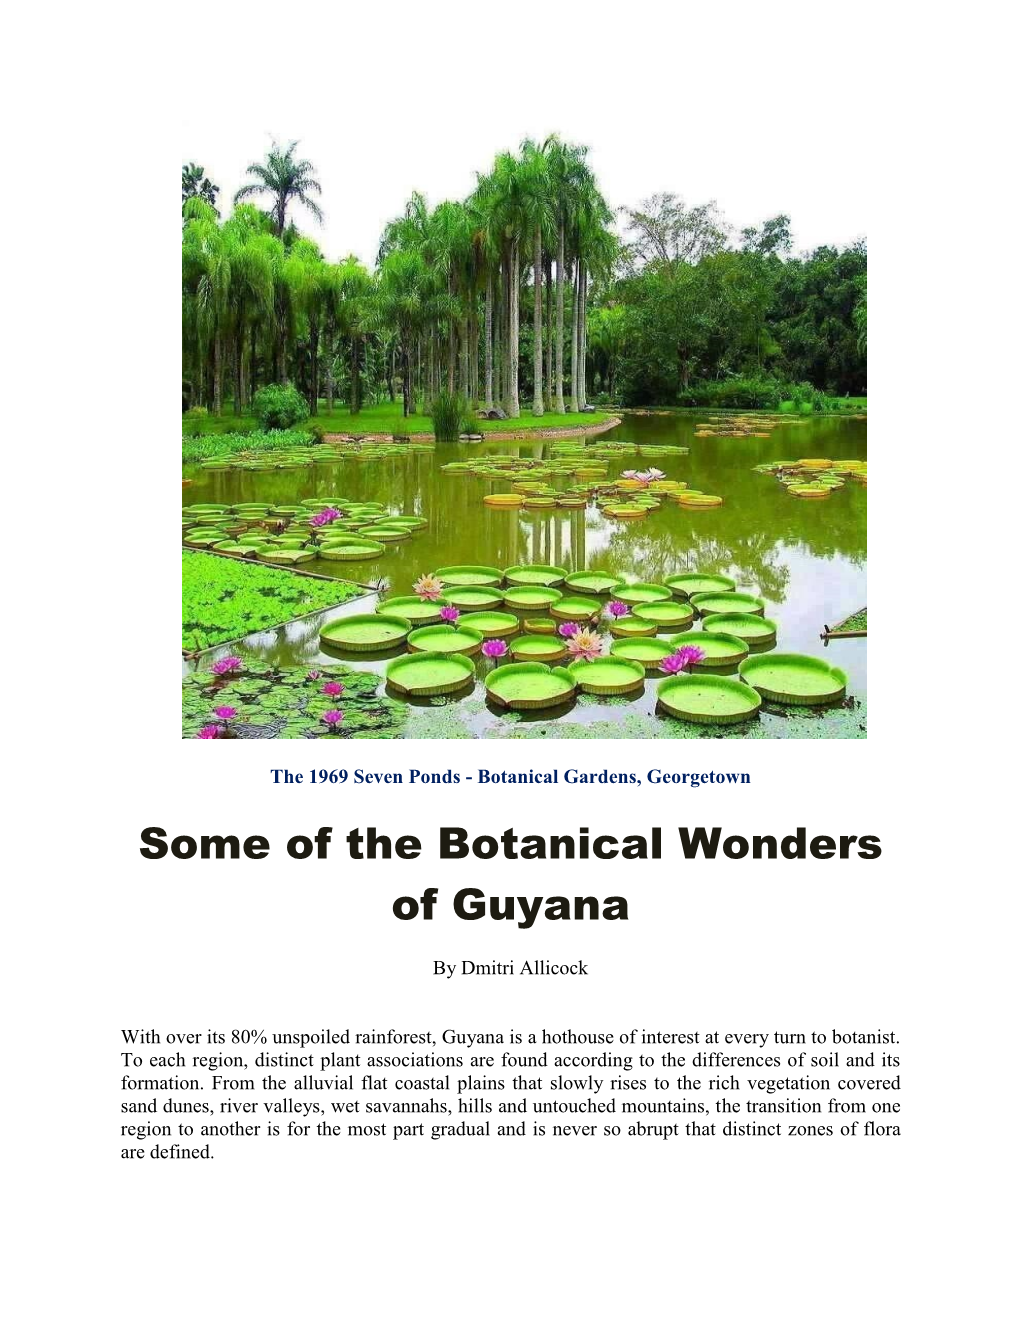 Botanical Wonders of Guyana